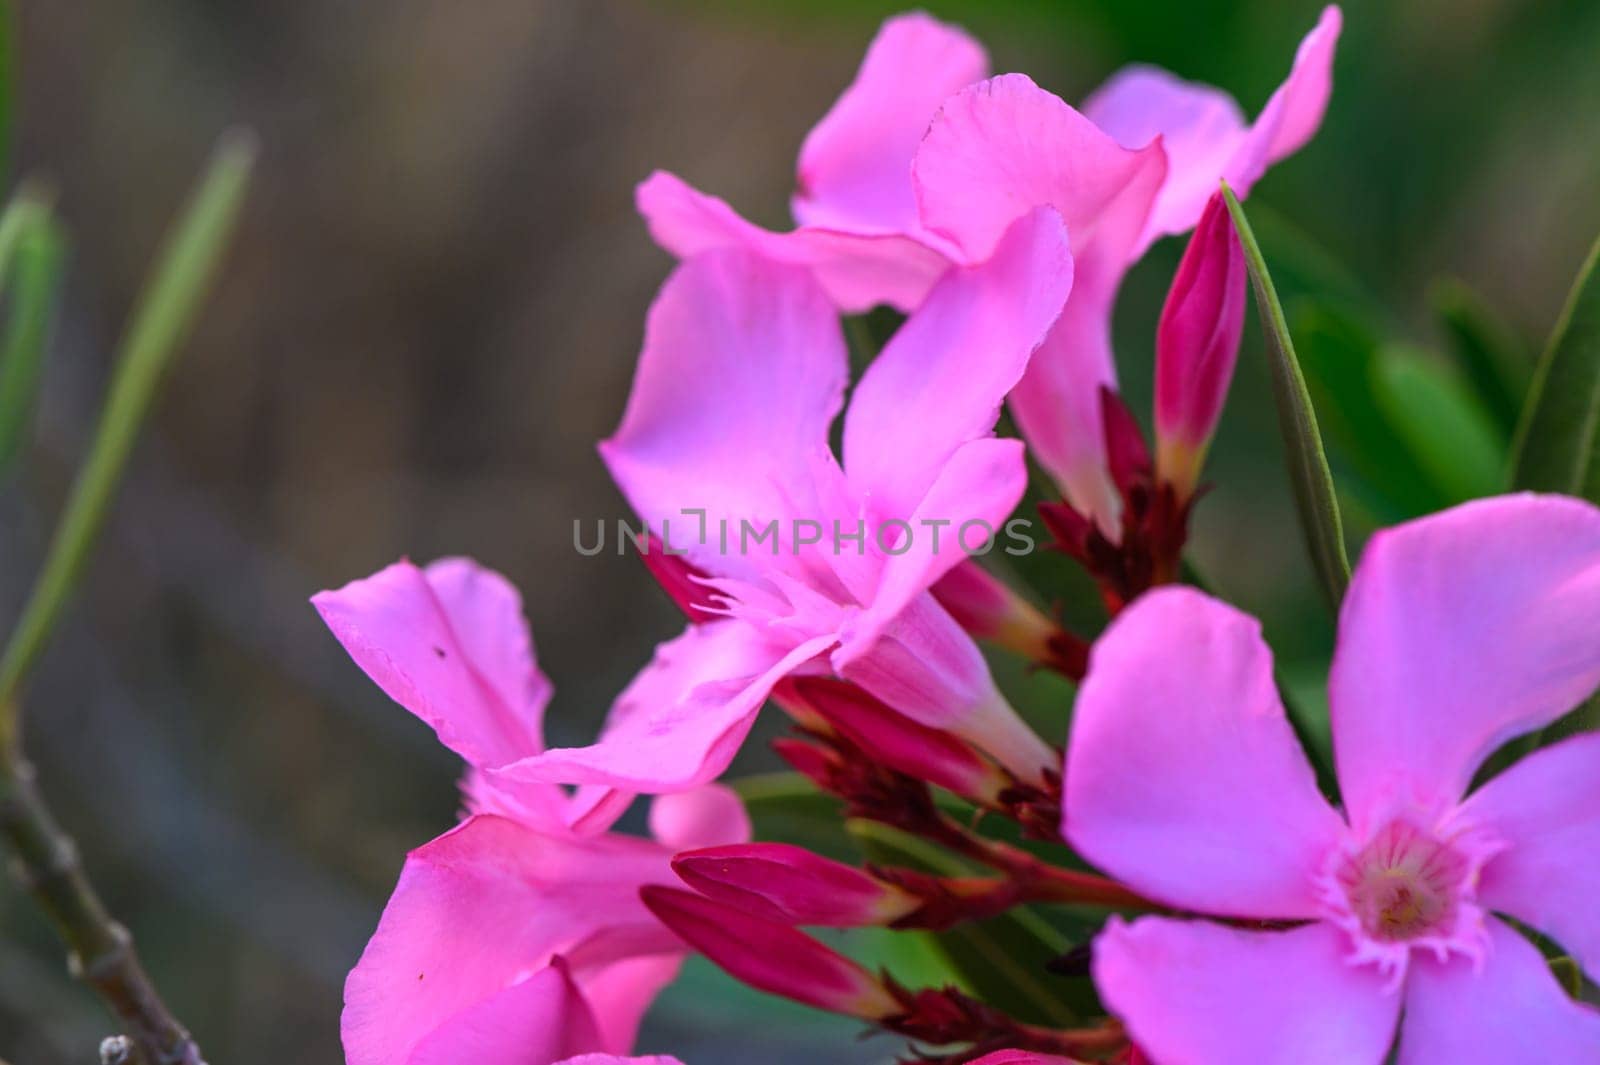 Nerium Nerium oleander flowers in bloom in pink color 2 by Mixa74